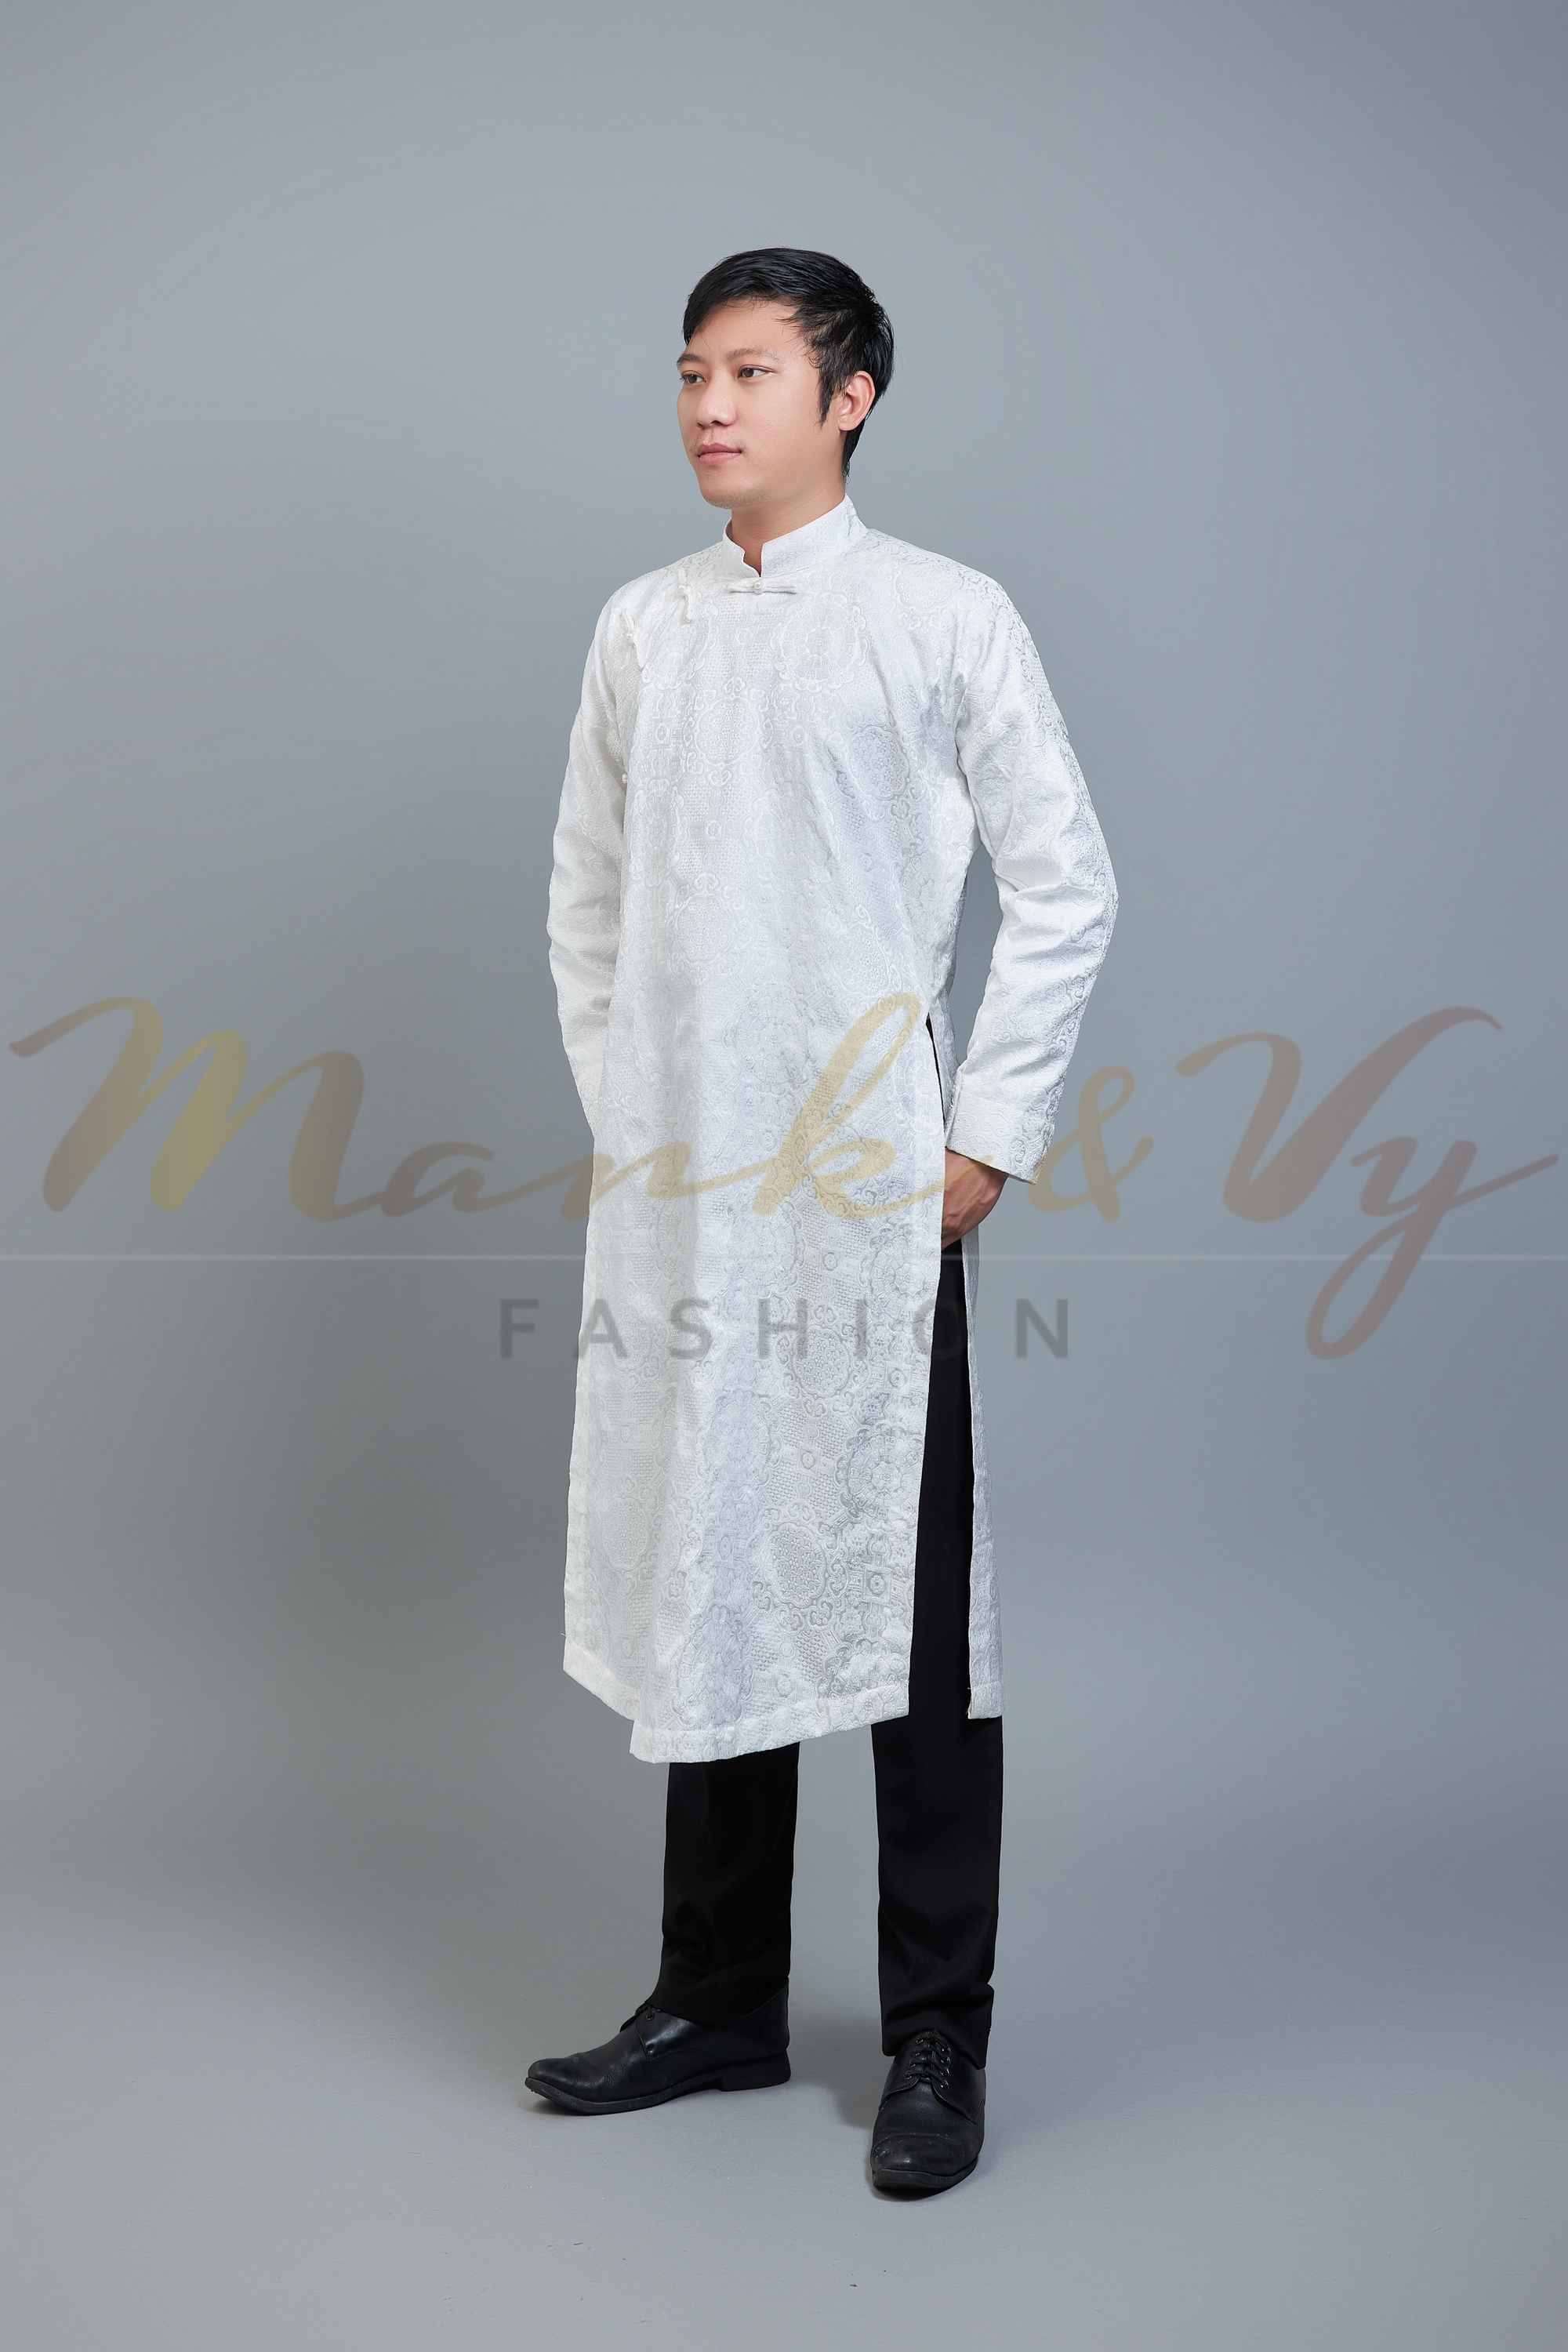 Men's ao dai in white - Vietnamese national clothing. Free custom fit.